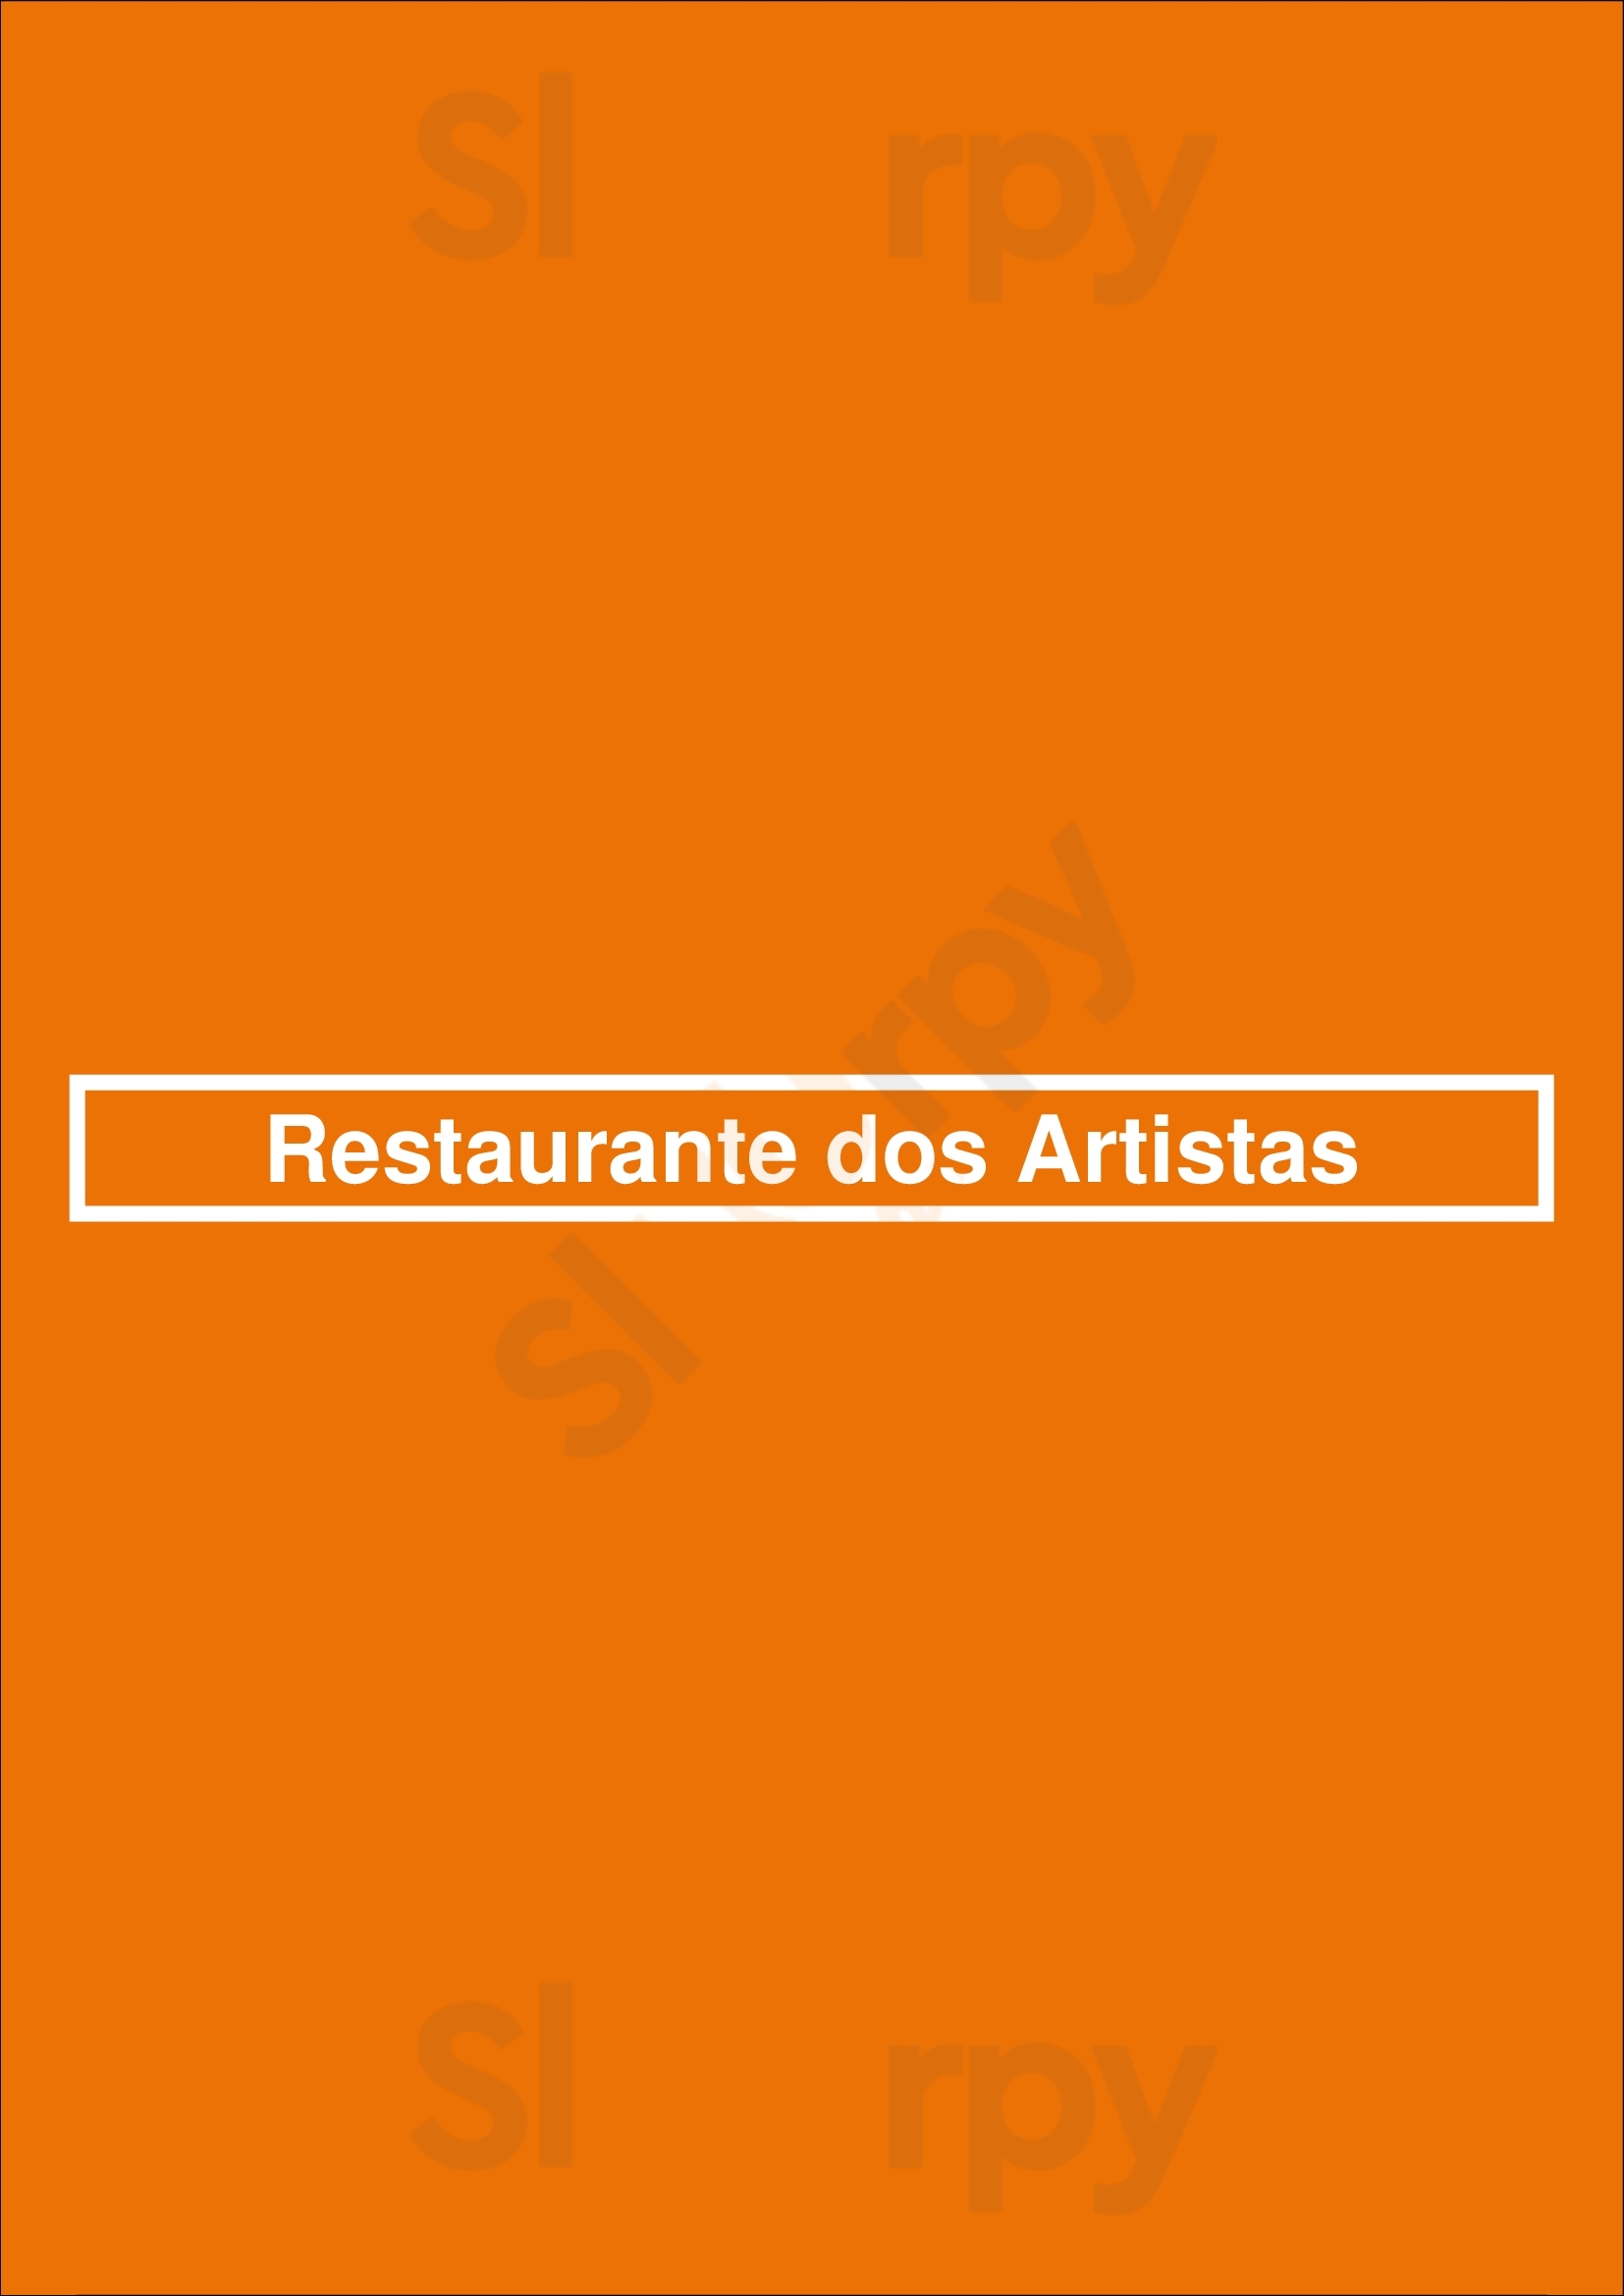 Restaurante Dos Artistas Lagos Menu - 1